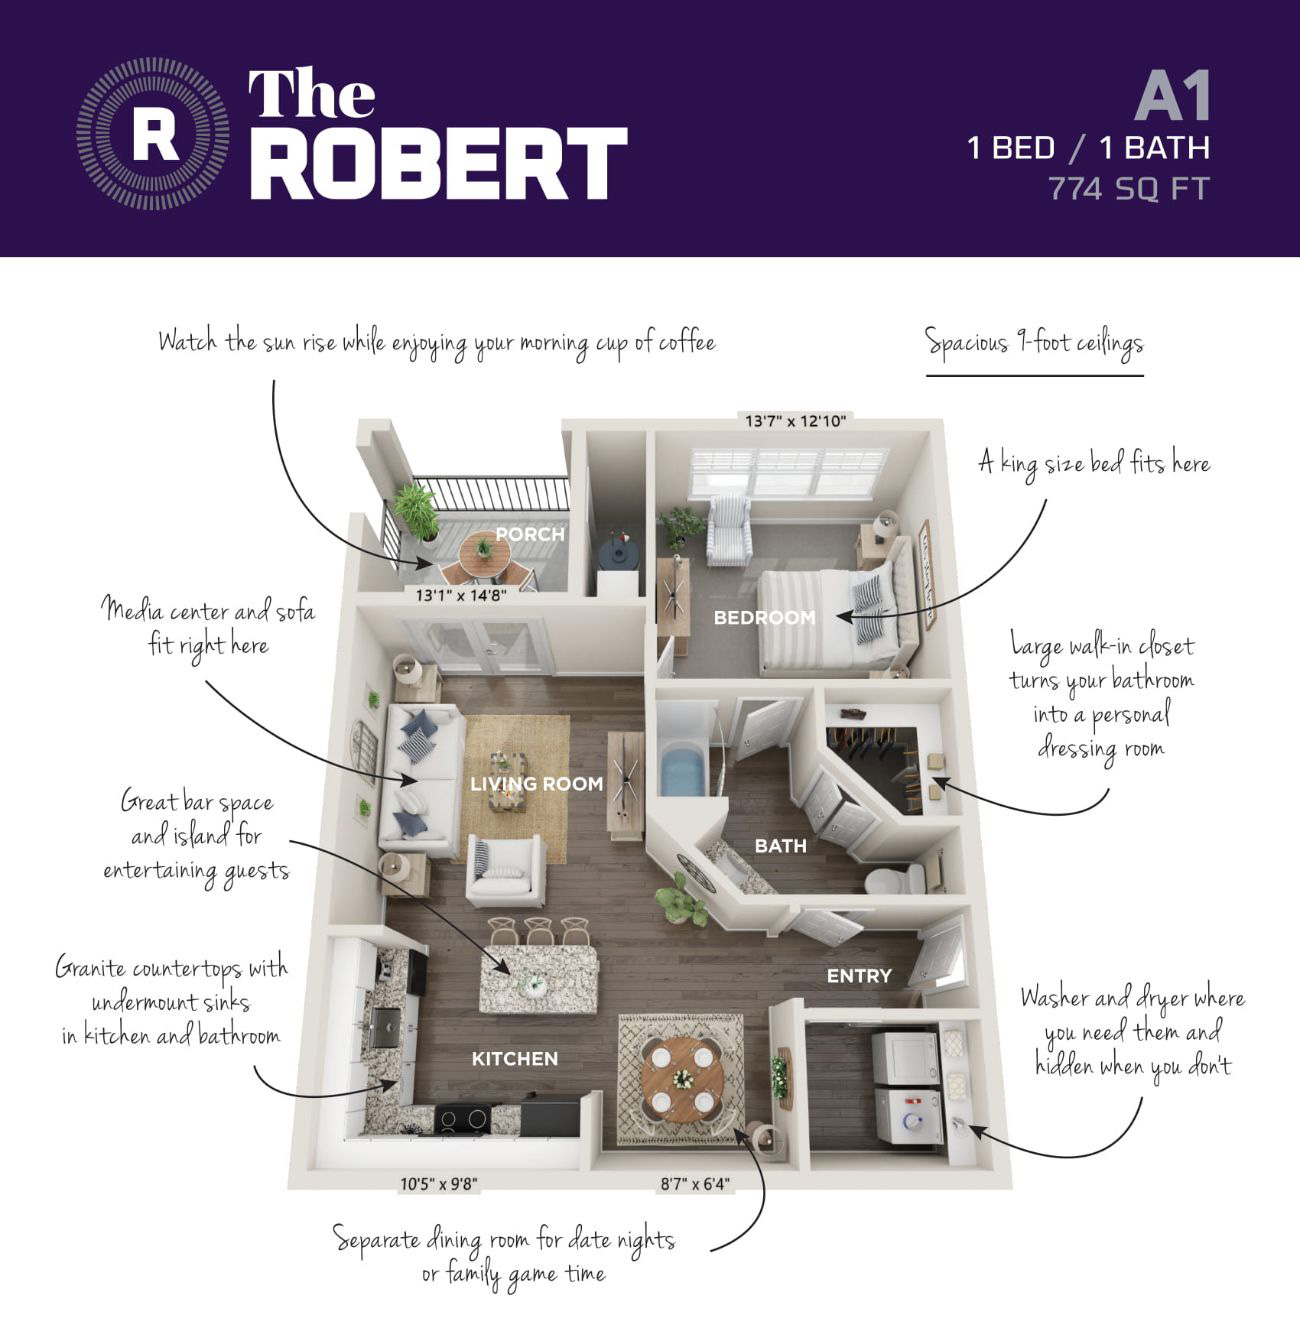 The Robert Apartments - A1